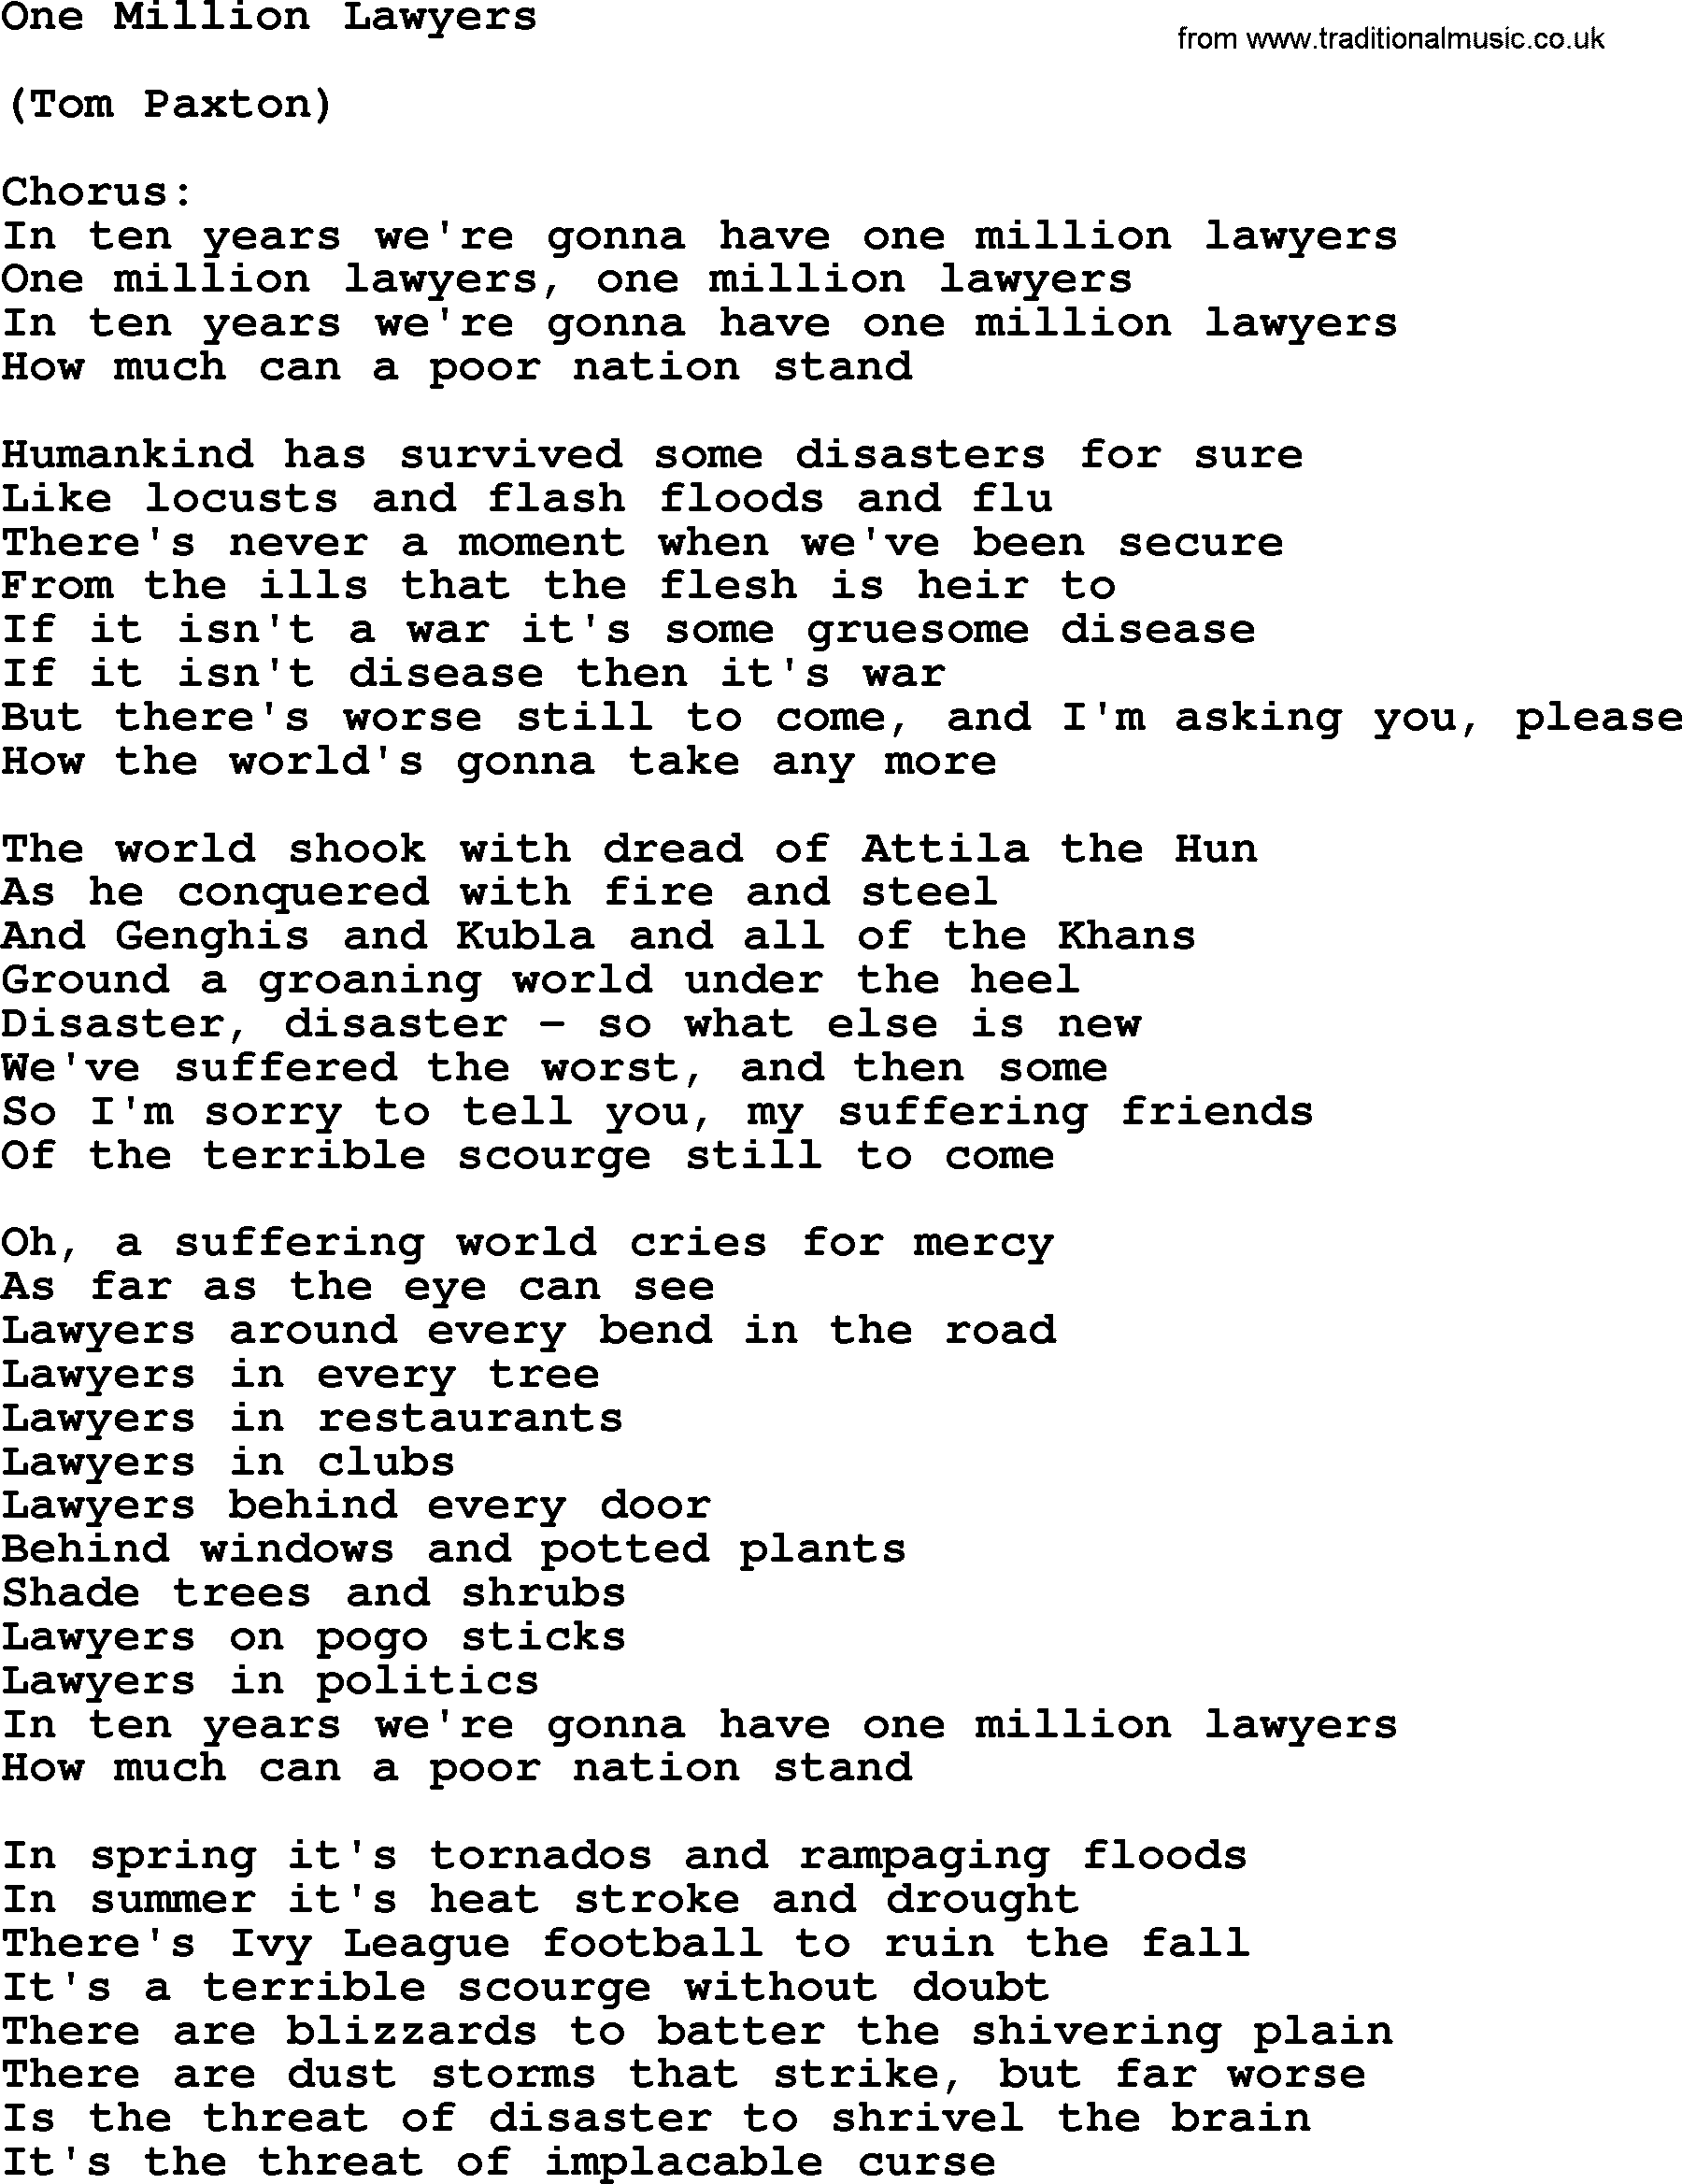 Tom Paxton song: One Million Lawyers, lyrics